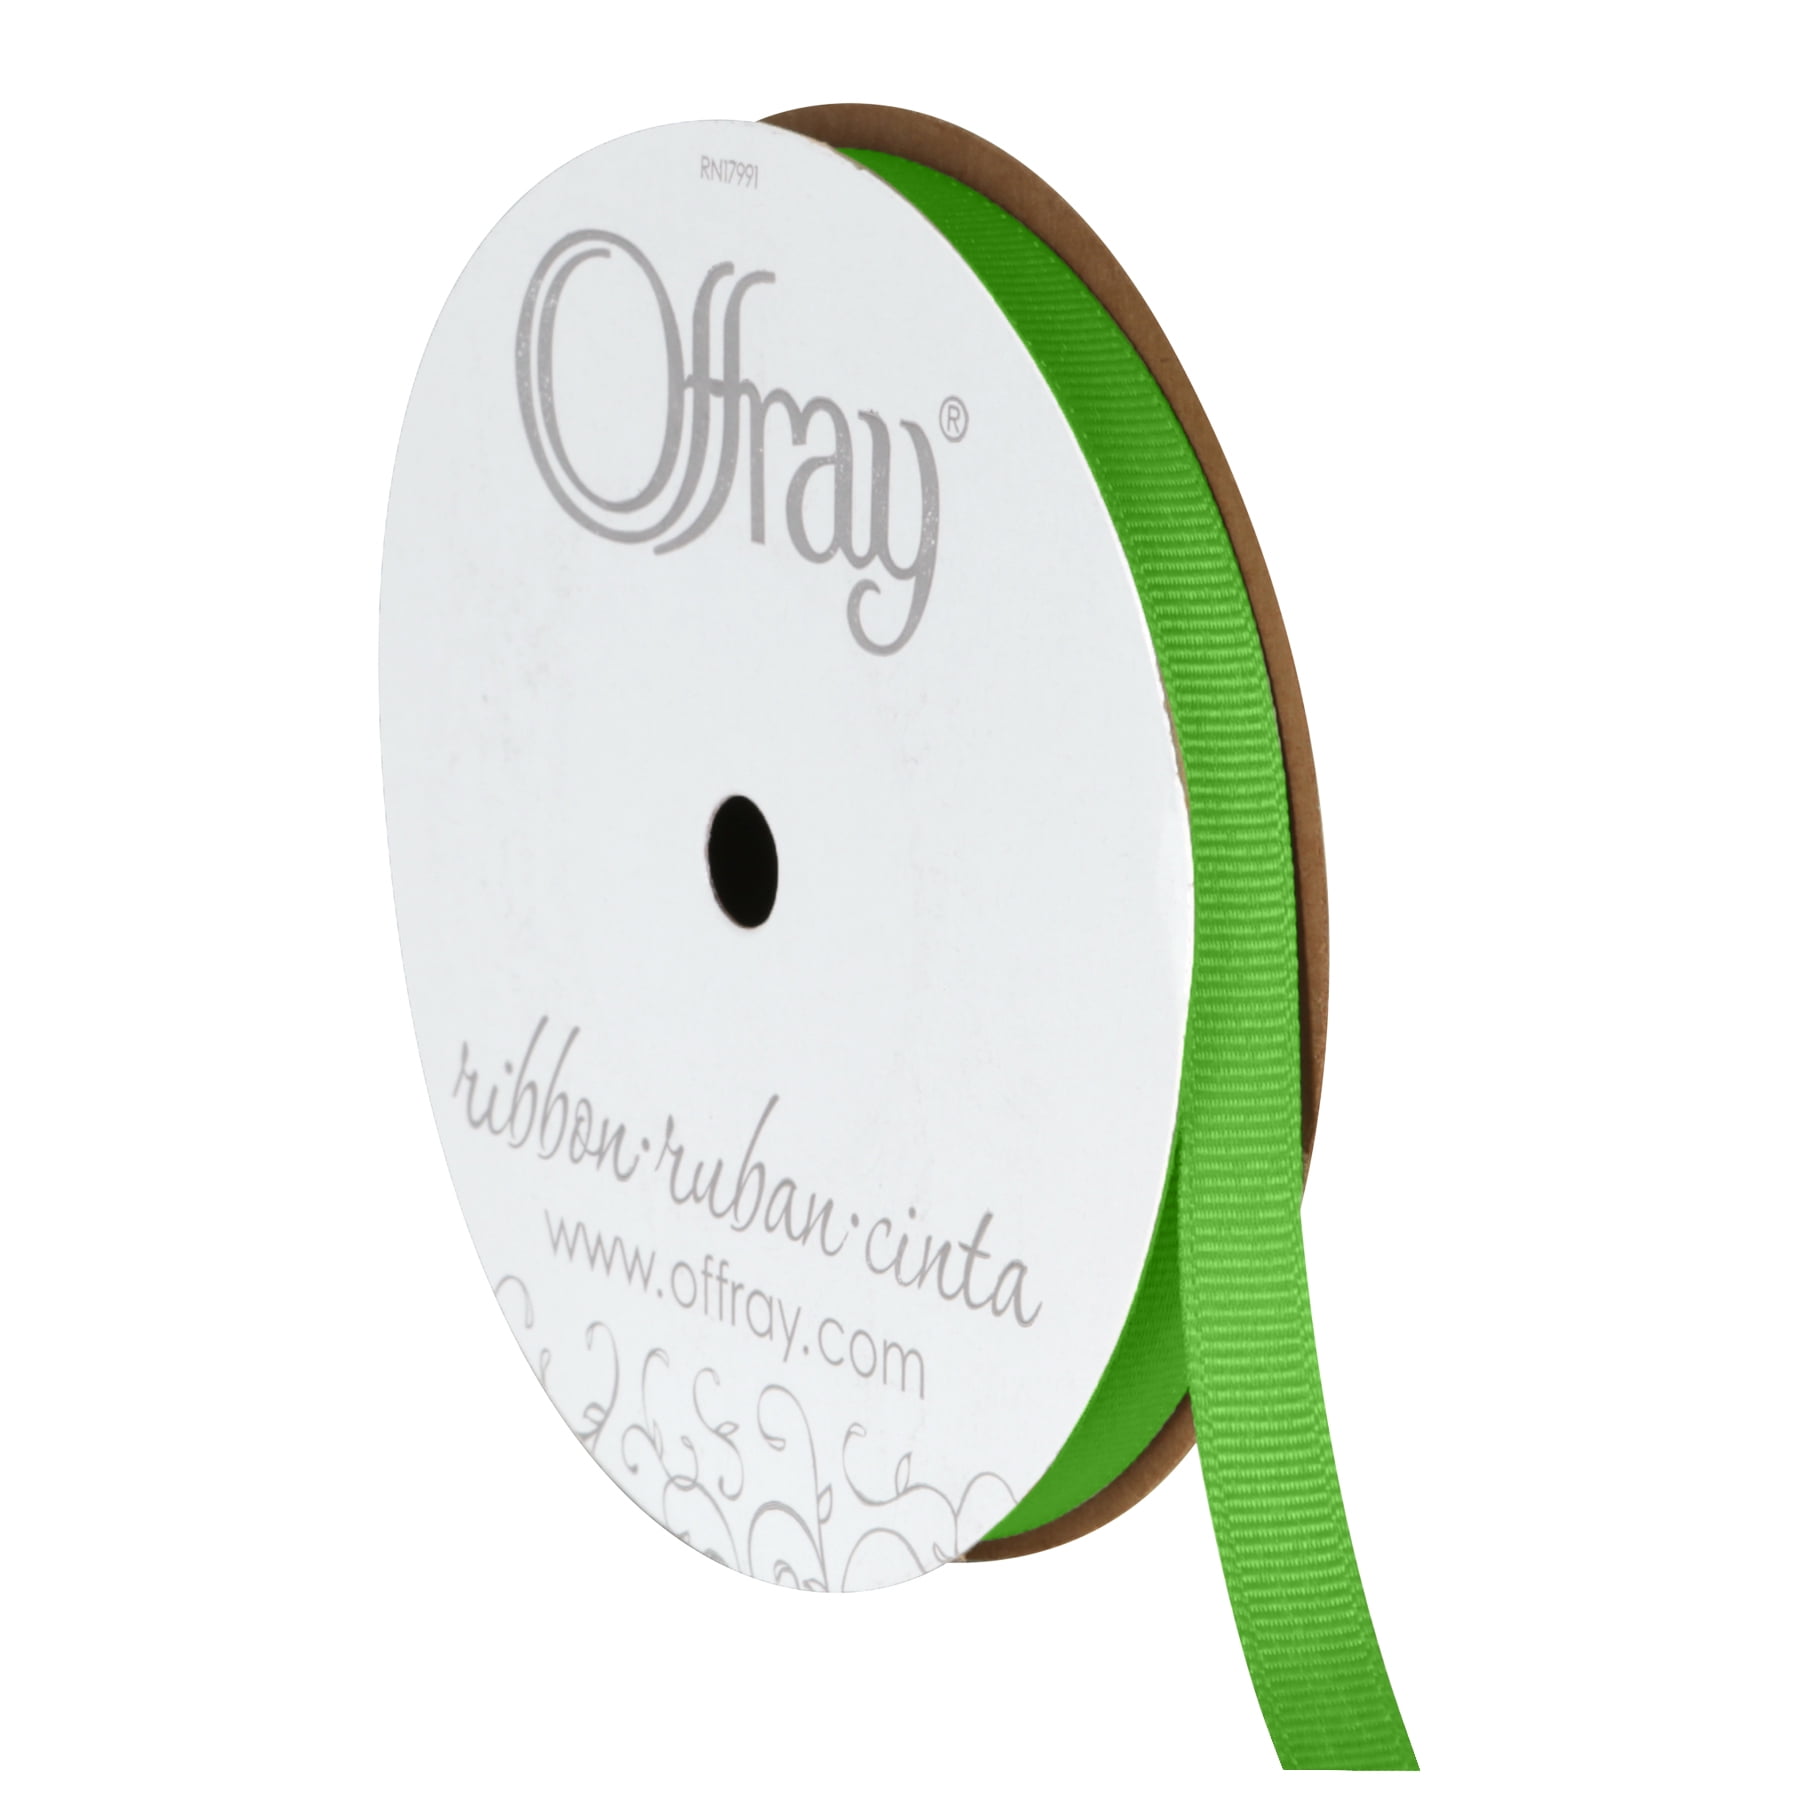 Offray Ribbon, Apple Green 3/8 inch Grosgrain Polyester Ribbon, 18 feet